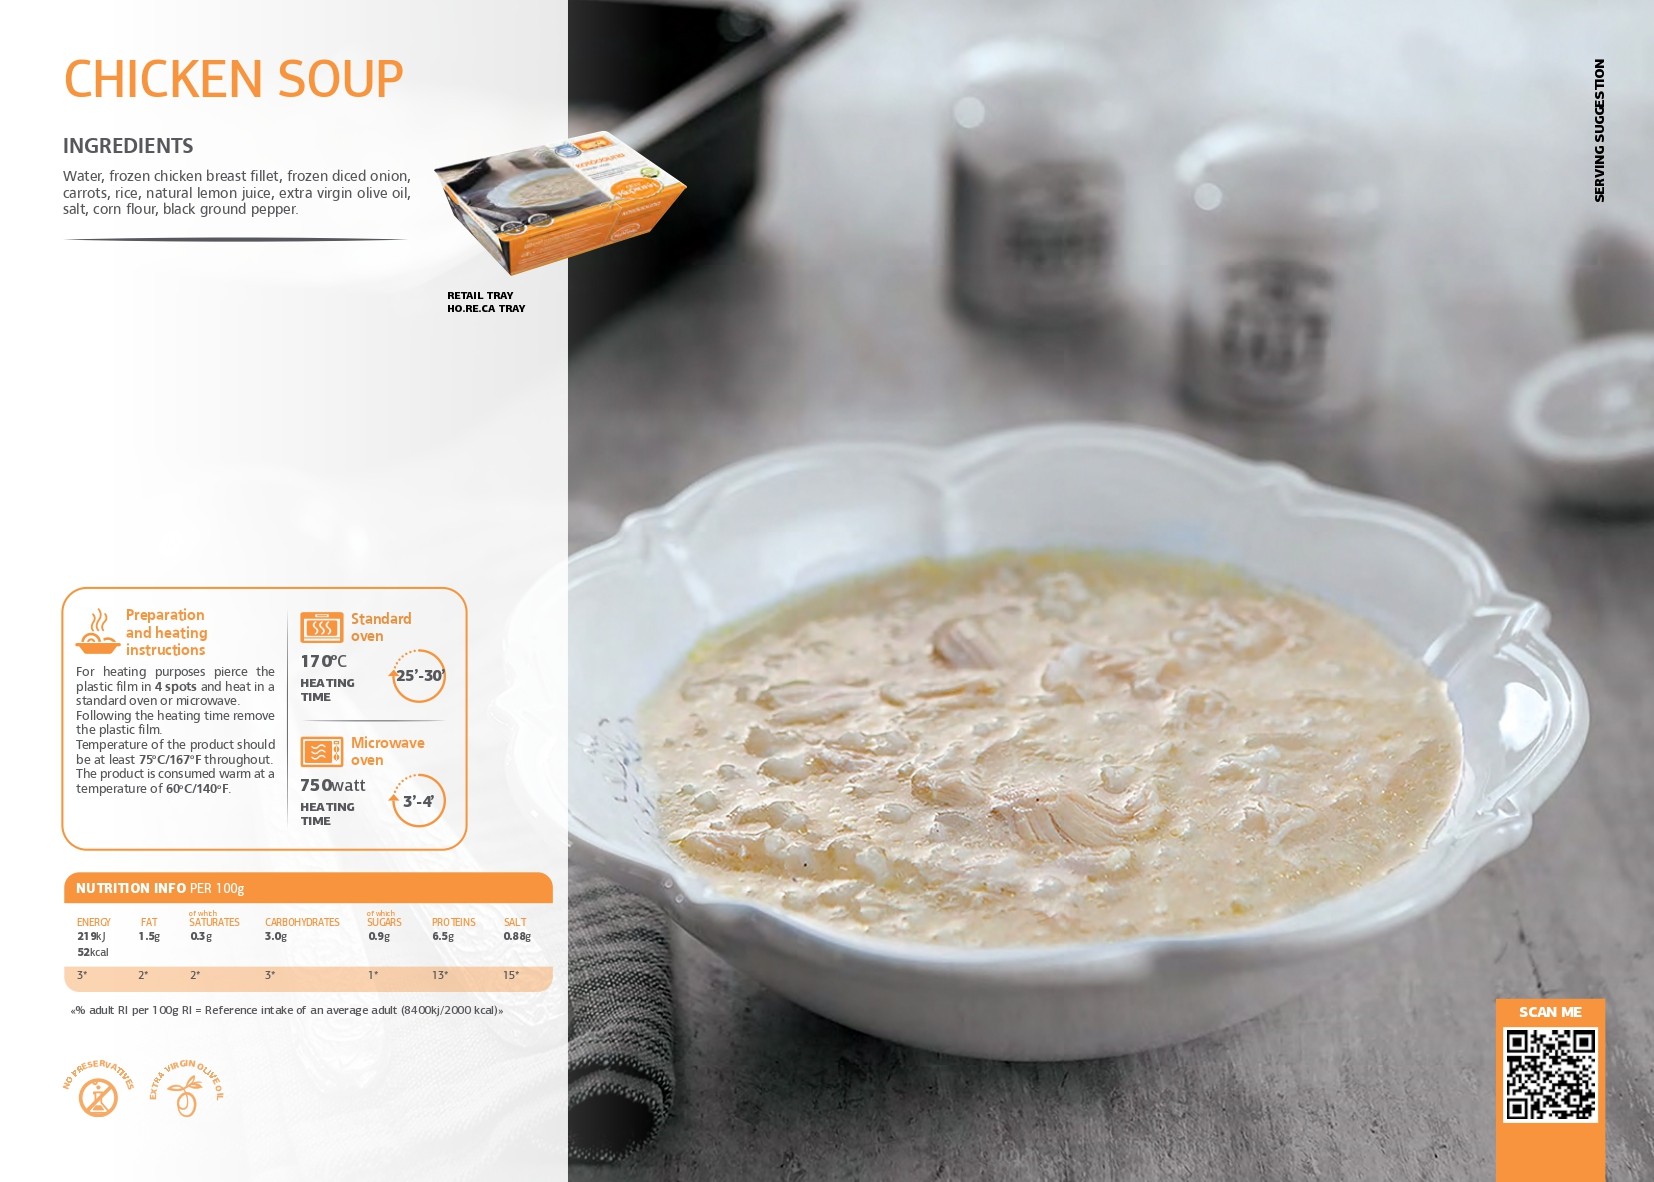 SK - Chicken soup pdf image